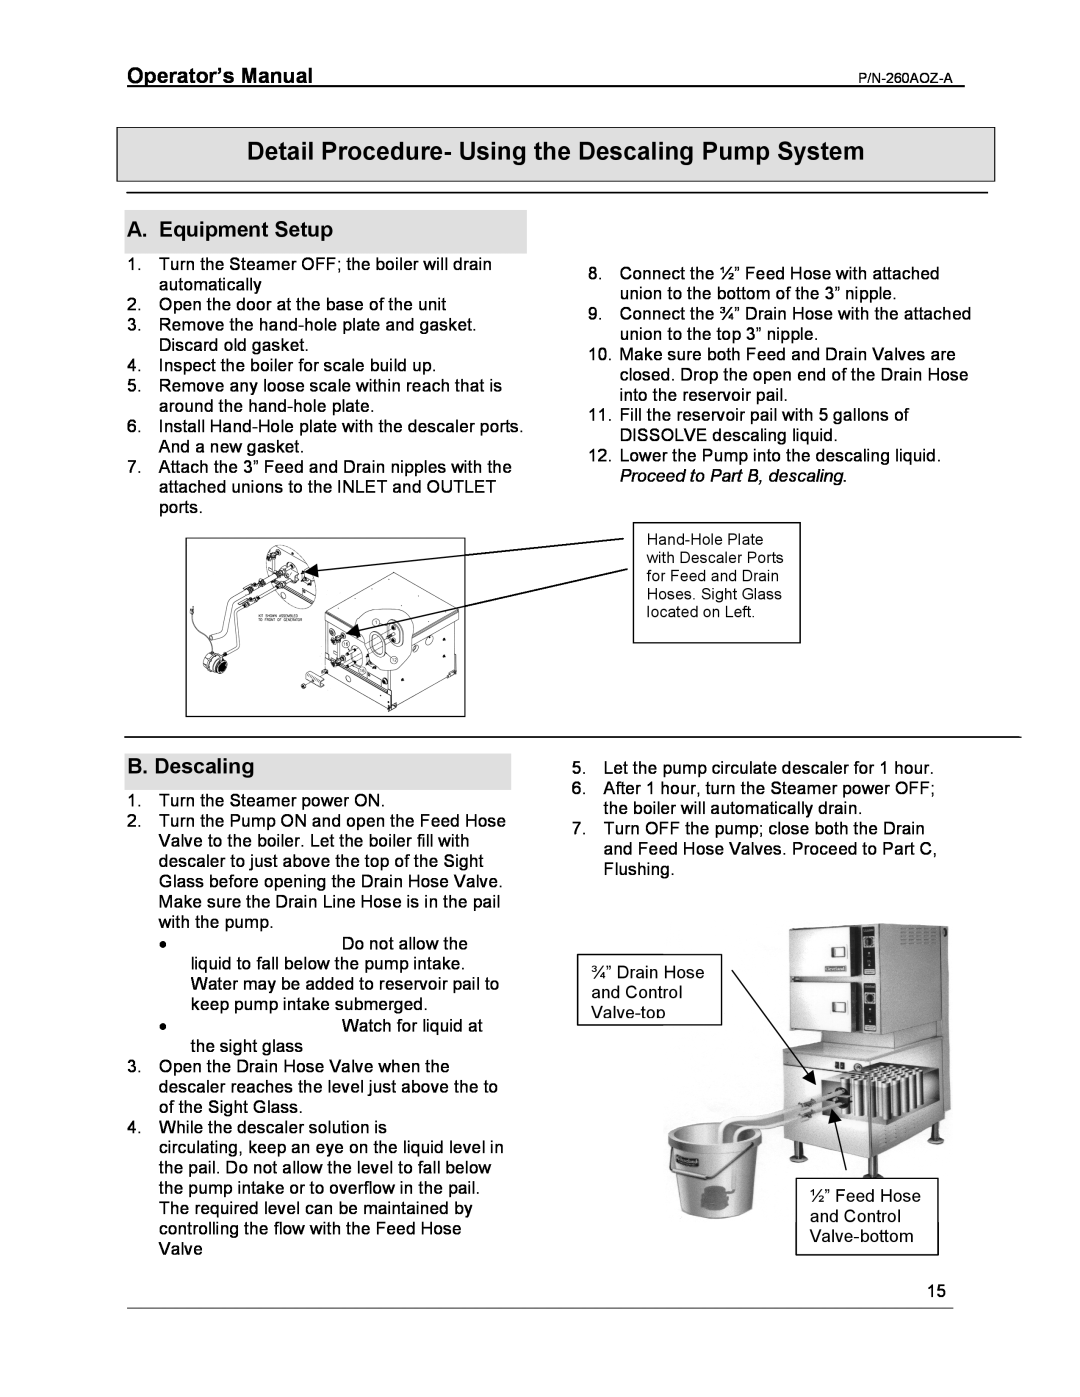 Cleveland Range 24/36CGM manual Detail Procedure- Using the Descaling Pump System, A. Equipment Setup, B. Descaling 